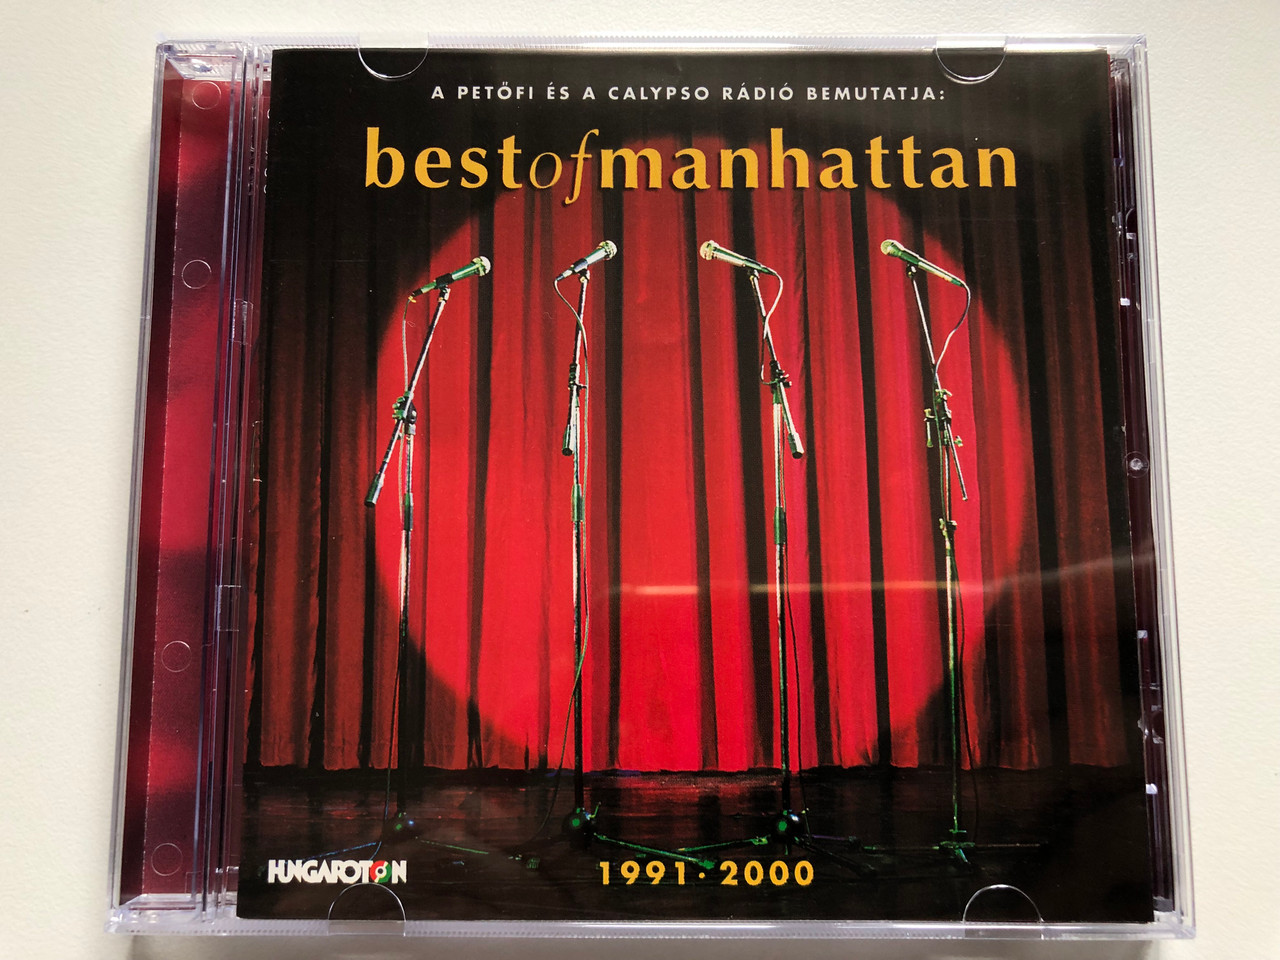 A Petofi Es A Calypso Radio Bemutatja: Best Of Manhattan 1991 - 2000 /  Hungaroton Audio CD 2000 / HCD 37985 - bibleinmylanguage